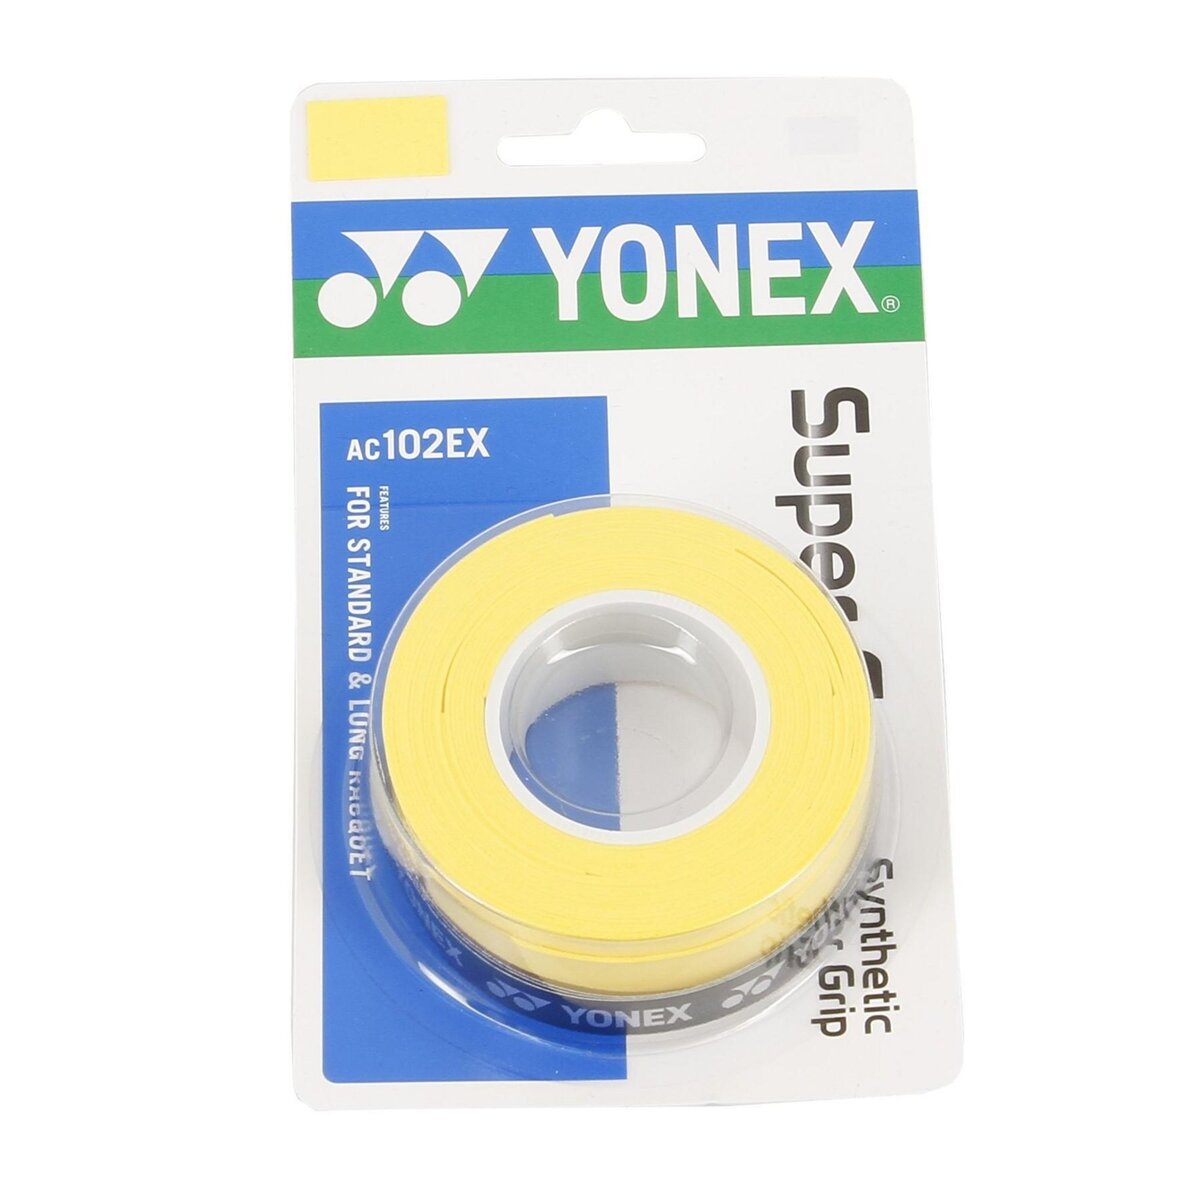 YONEX Surgrip badminton Yonex Surgrip yonex 102ex 11-26 pas cher